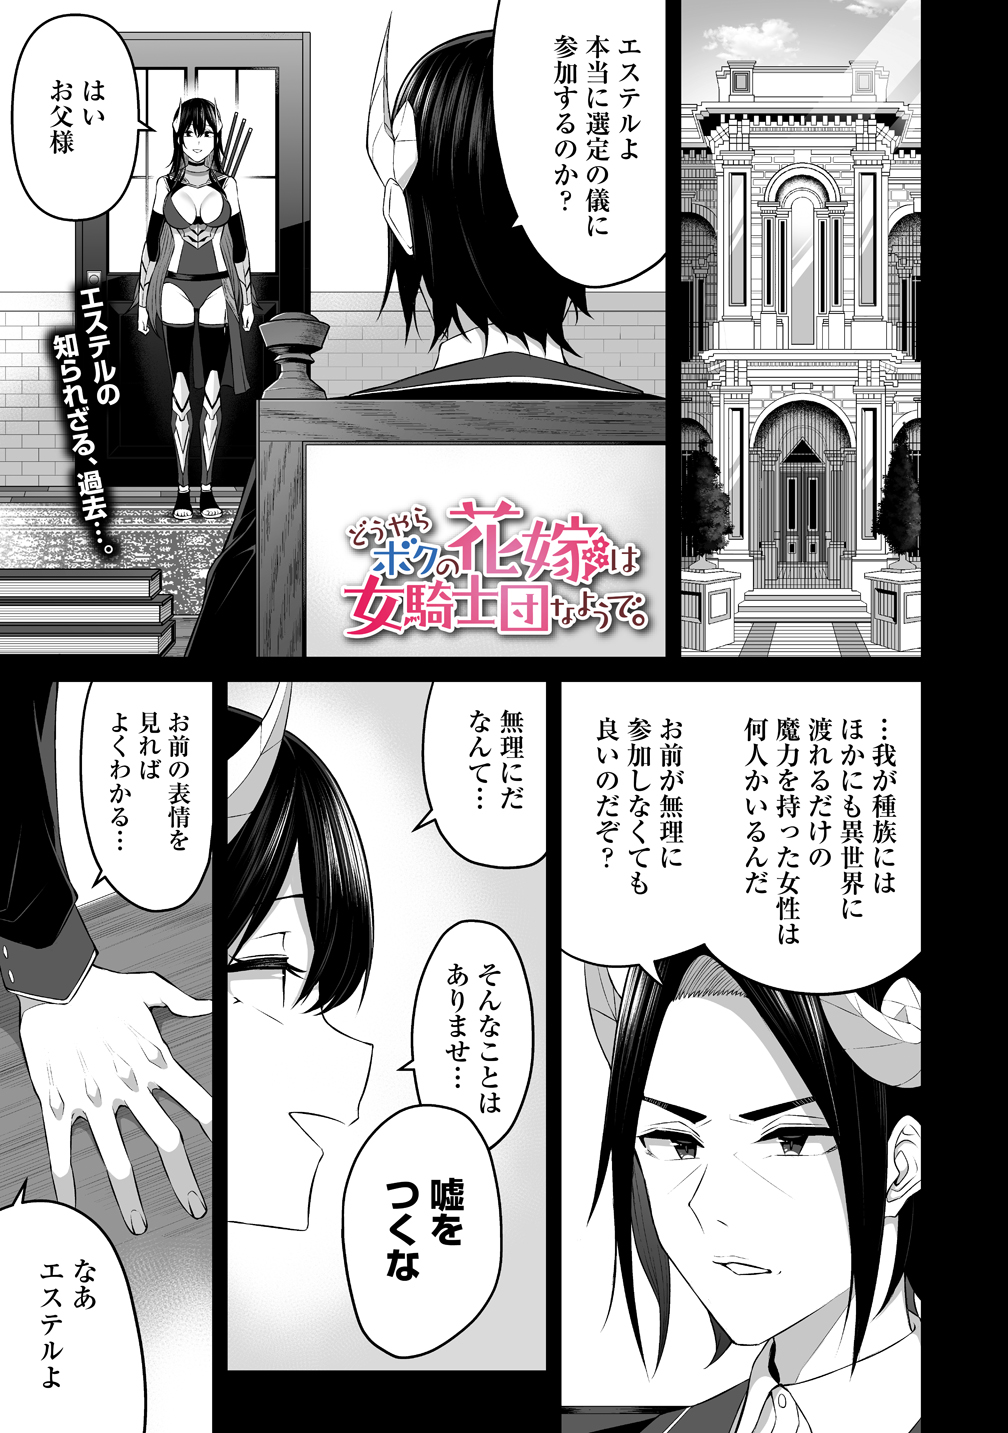 Douyara Boku no Hanayome wa Onna Kishidan na you de - Chapter 7 - Page 1